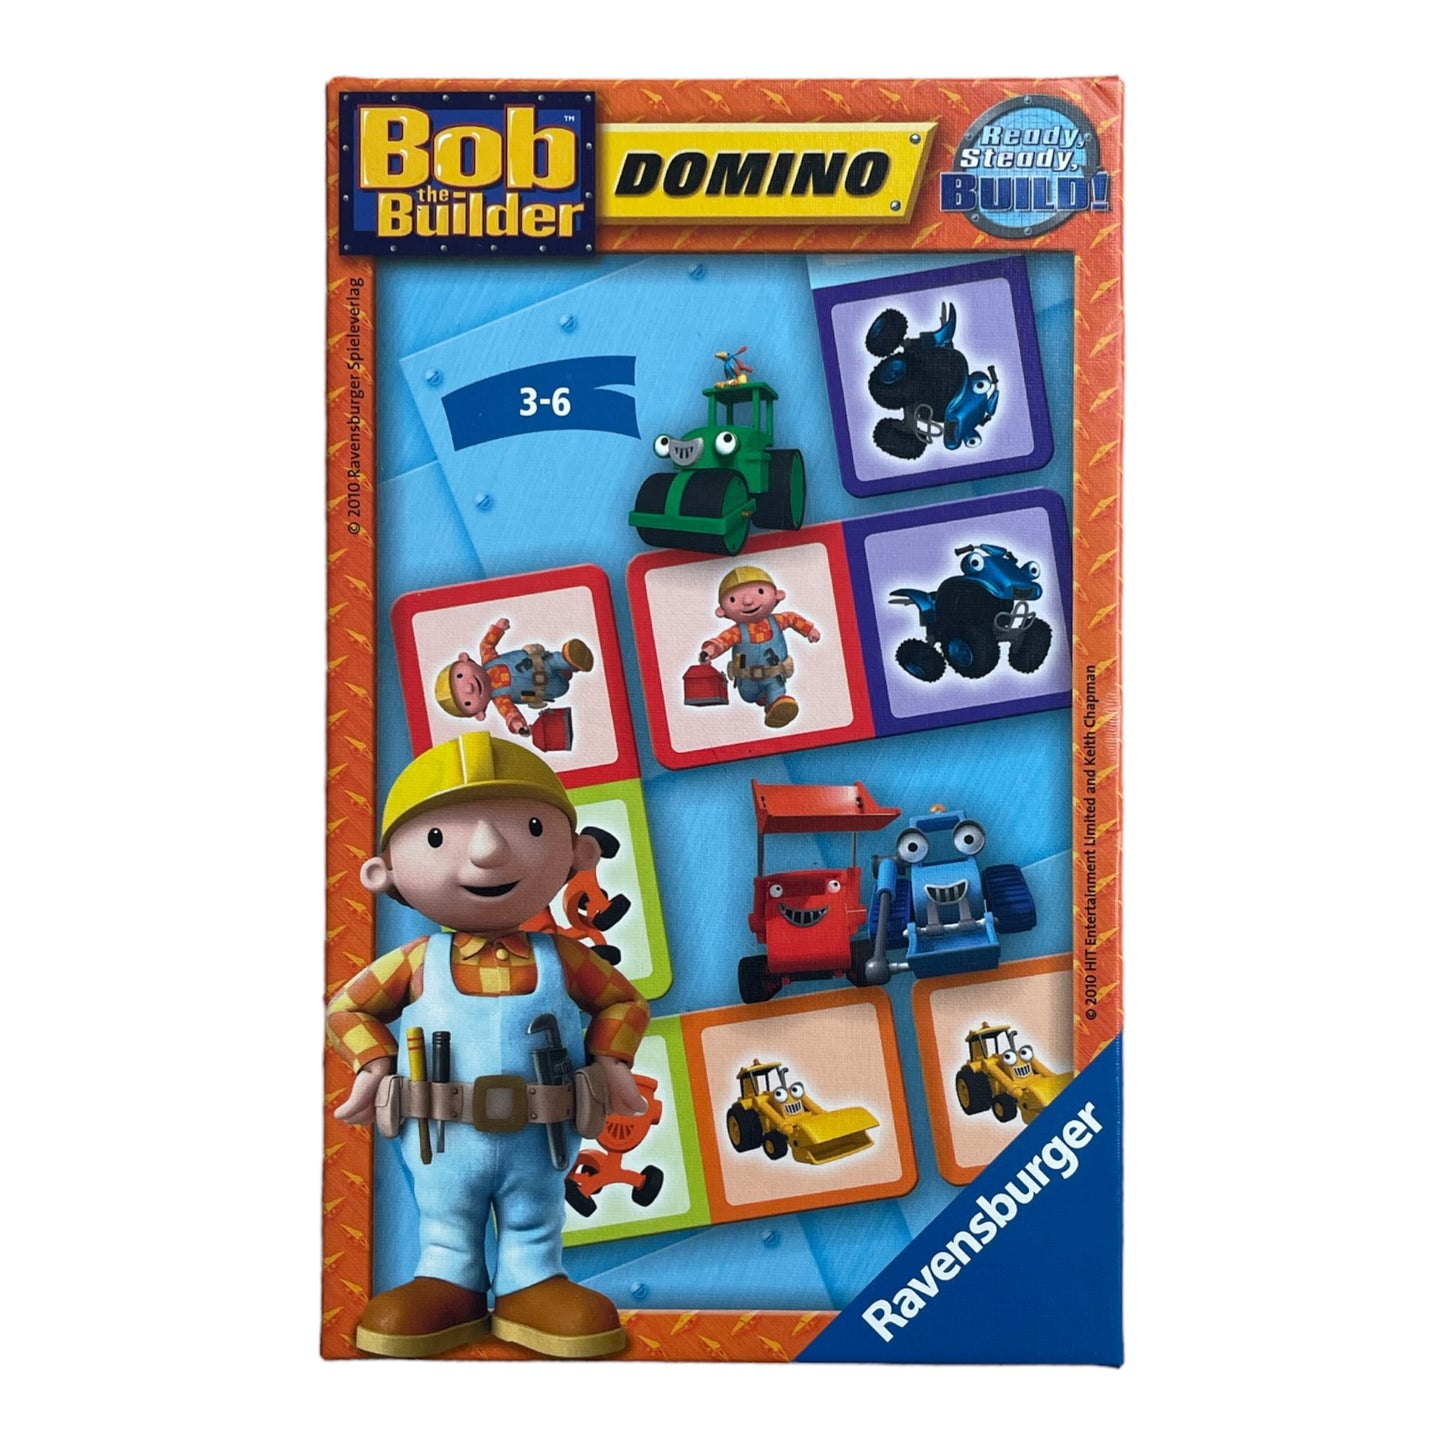 Ravensburger - Bob the Builder - Domino Game